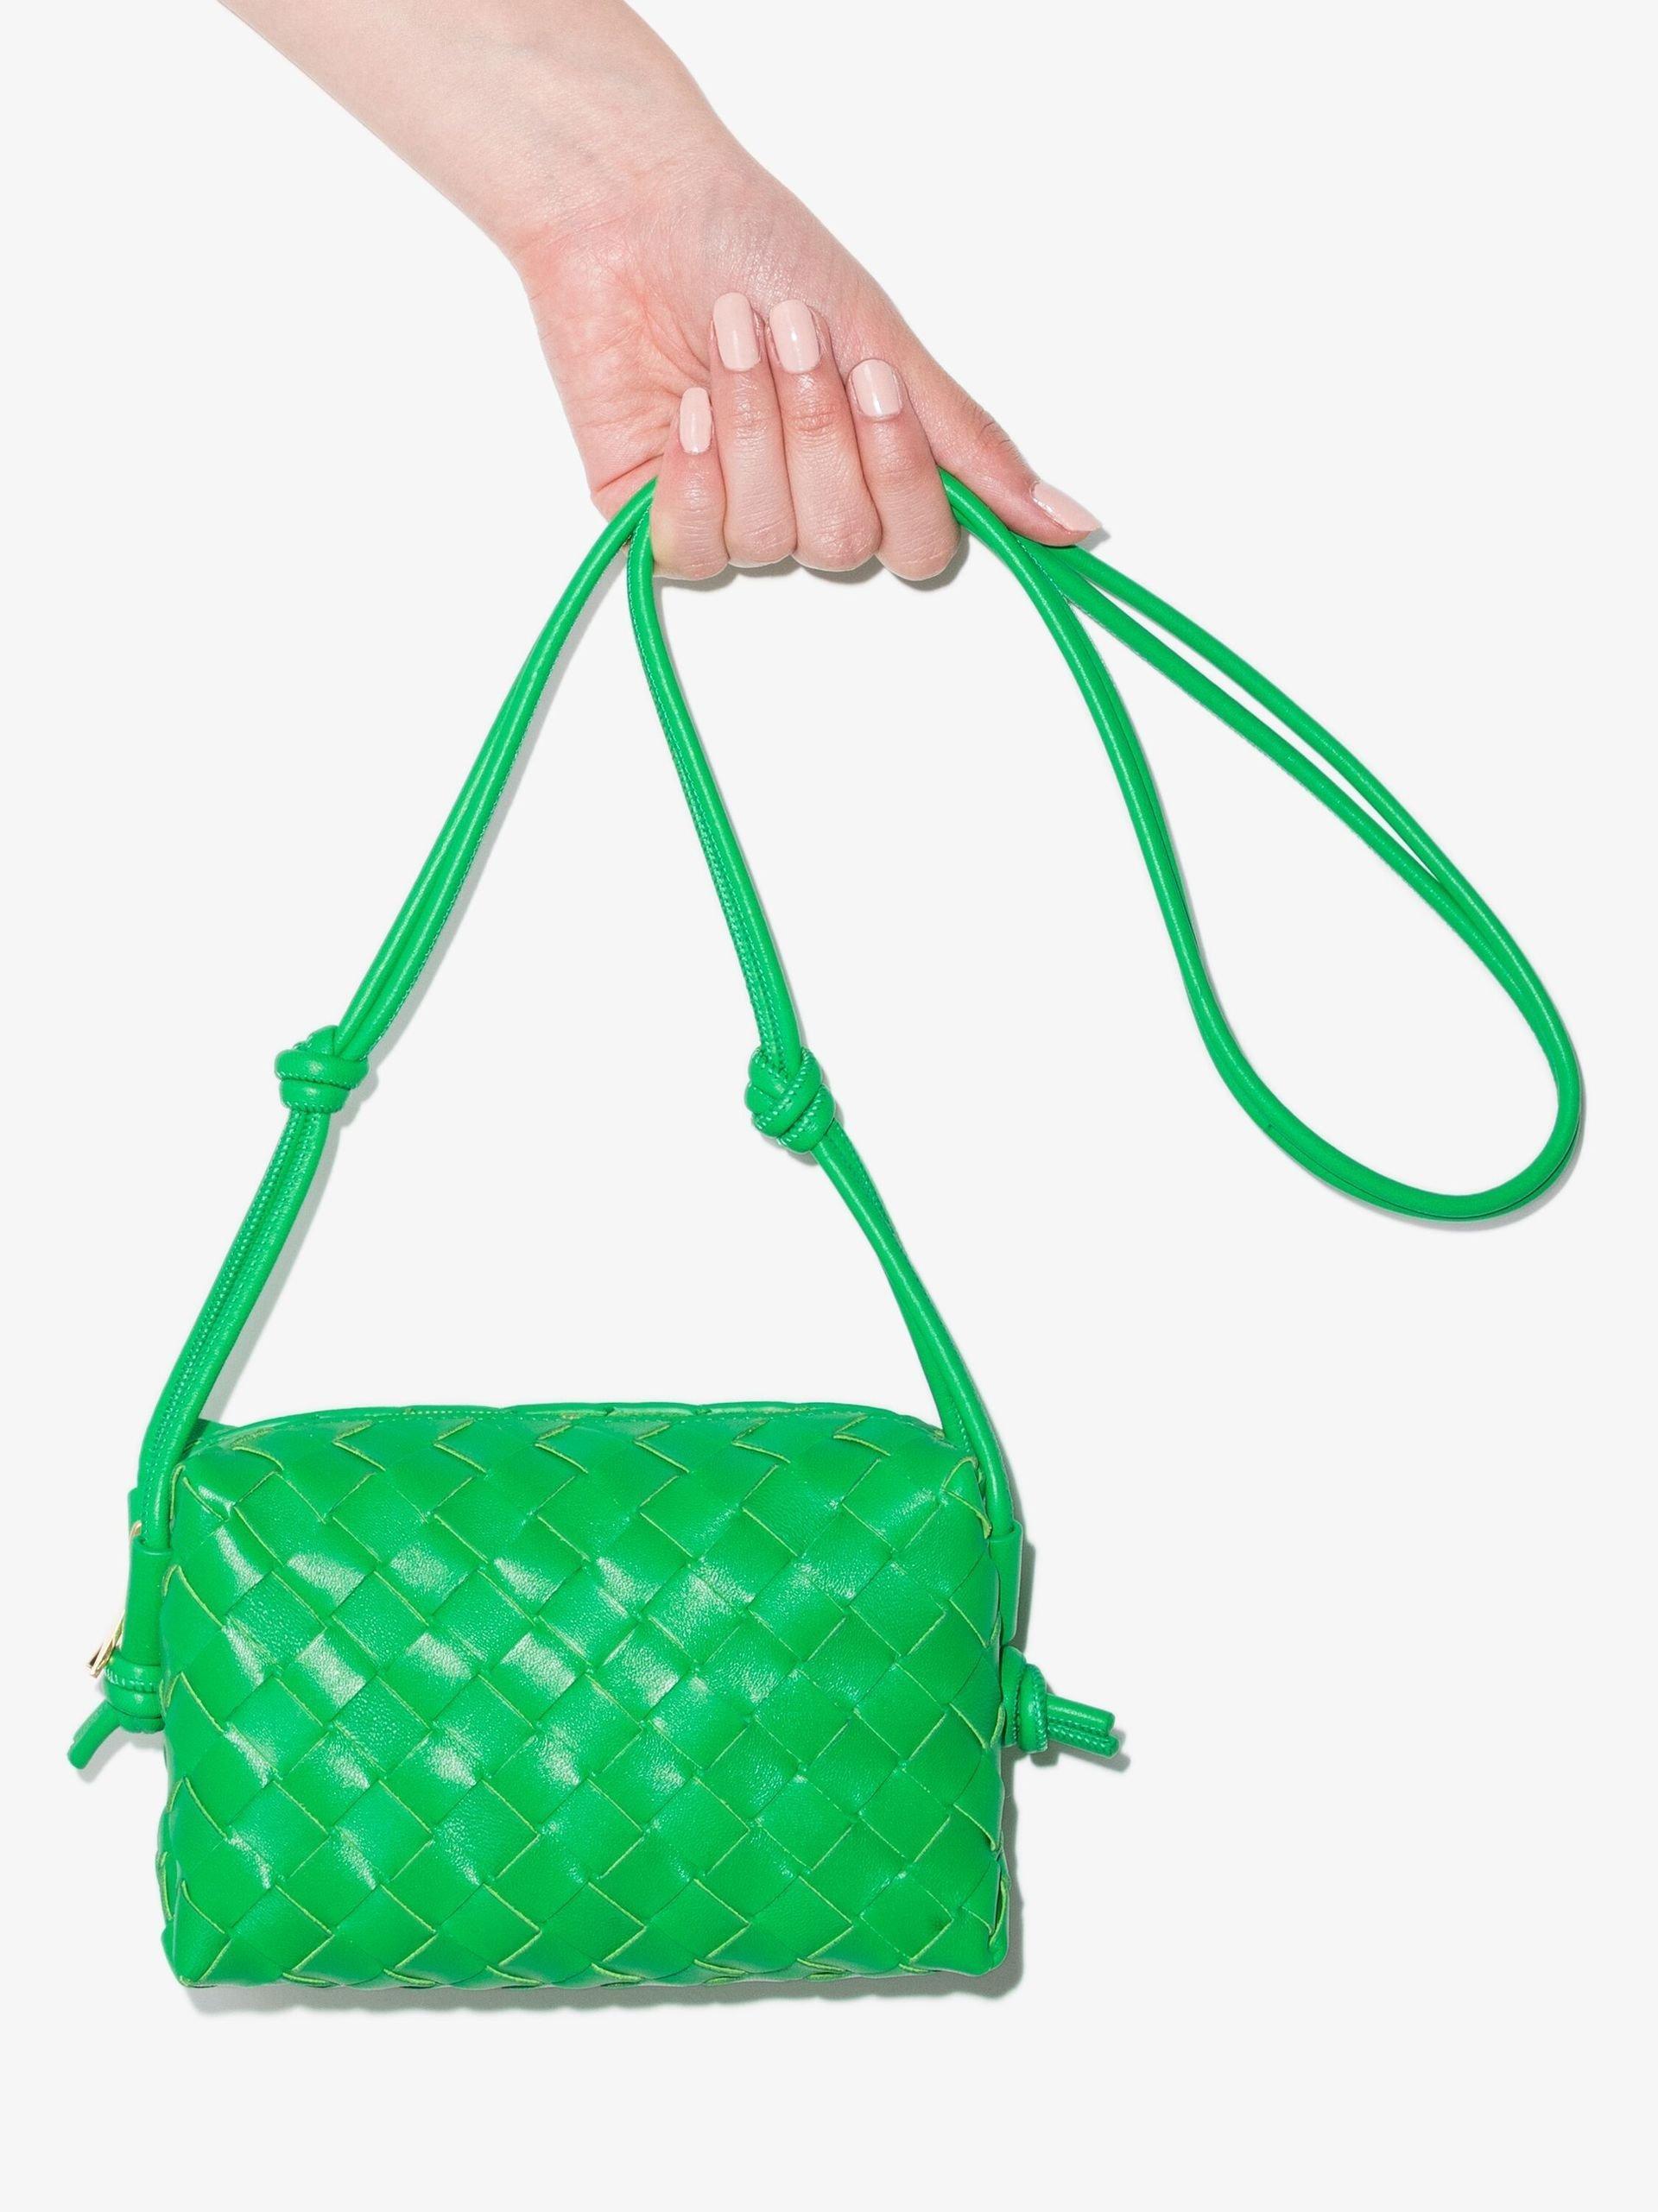 Bottega Veneta Loop Leather Cross Body Bag in Green